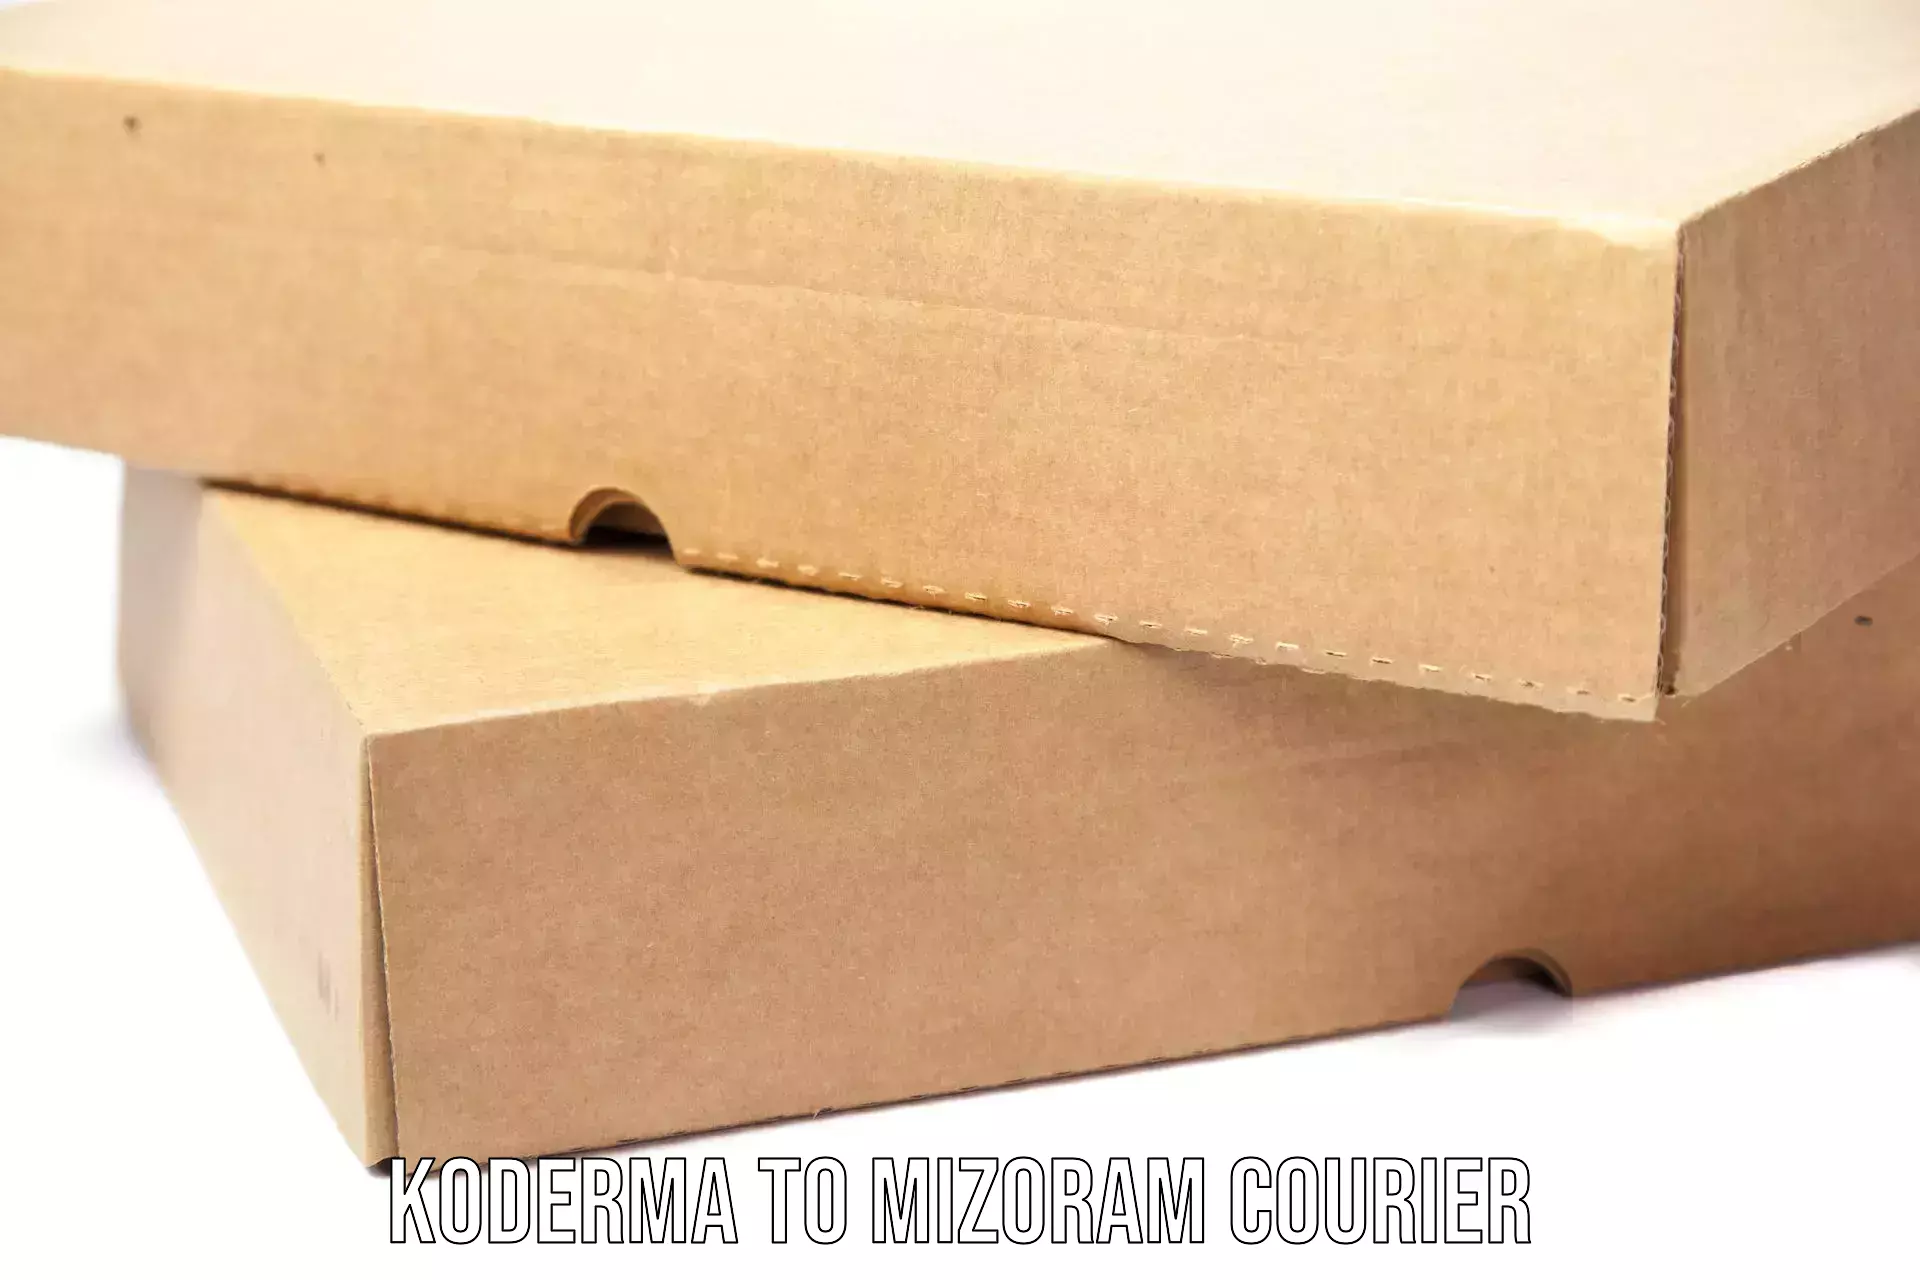 Cost-effective courier options Koderma to Mizoram